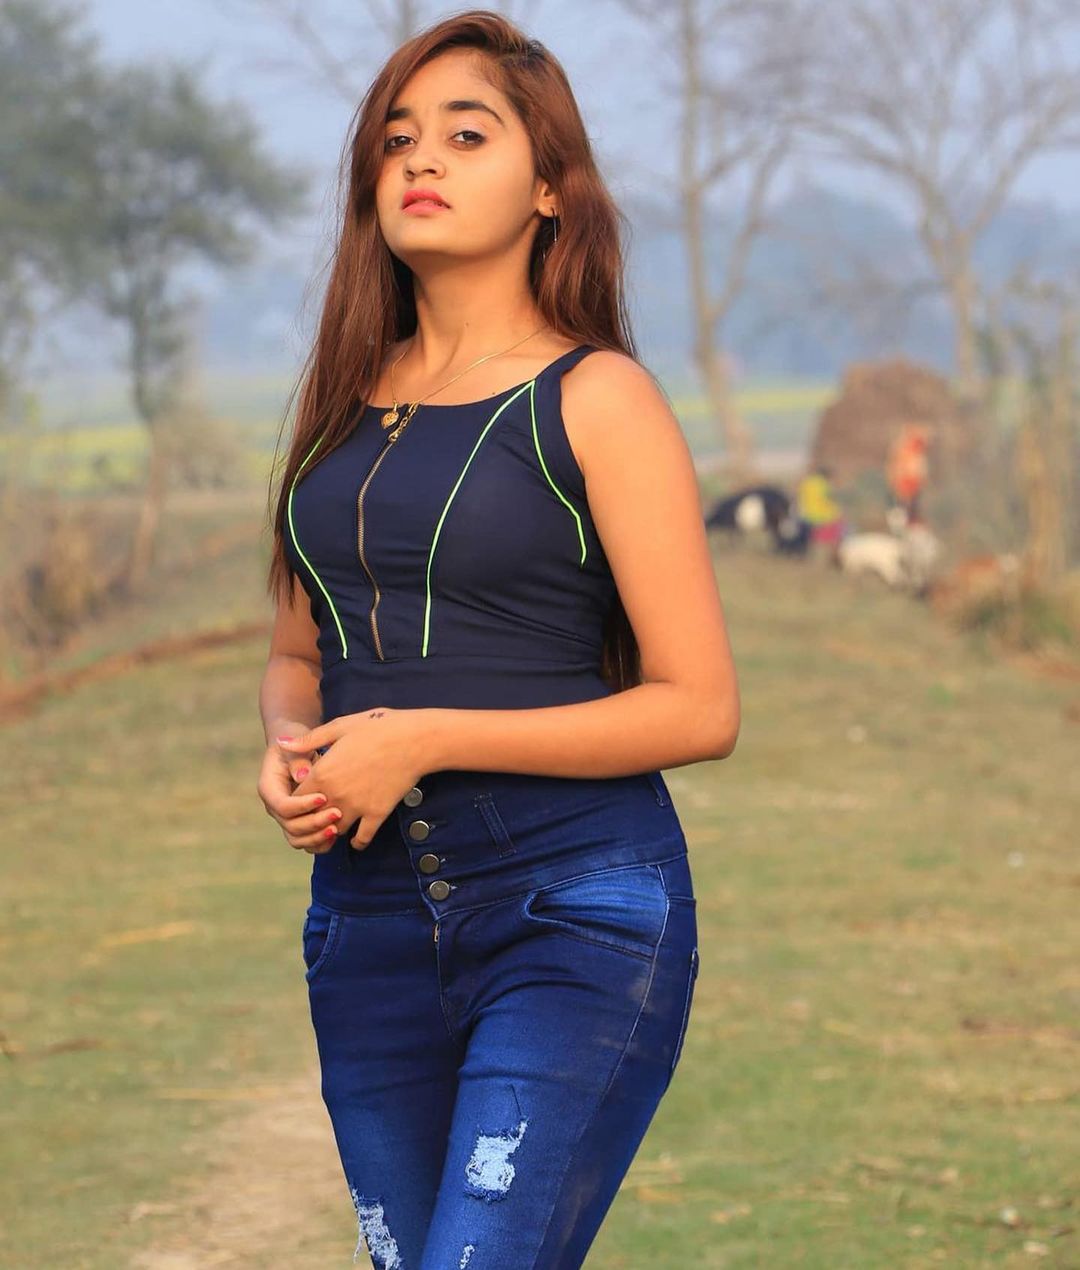 Bindass kavya blue dress hot sexy escorts girl sohanisharma